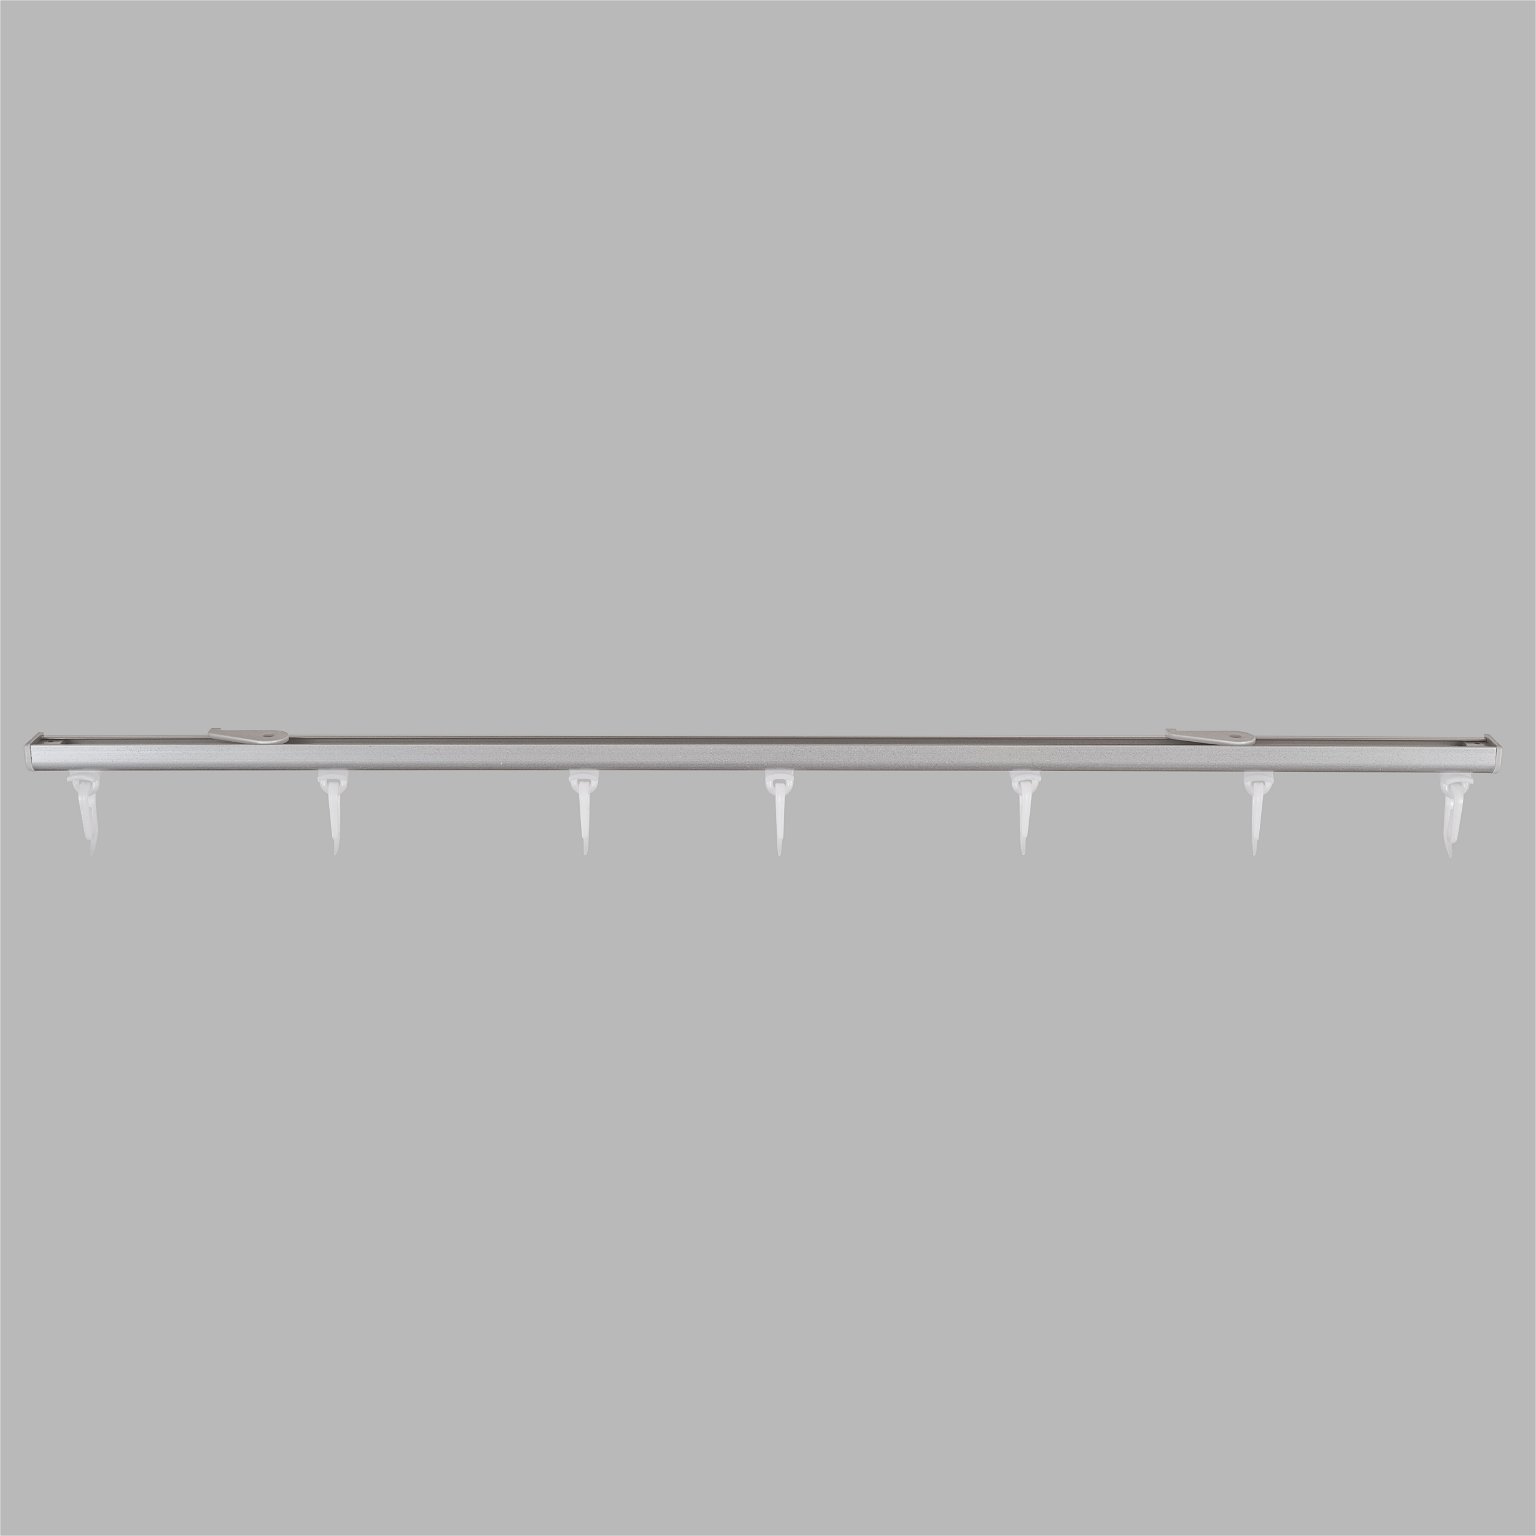 Aliuminio profilis D, matinio chromo sp., 150 cm, sukomplektuotas - 1